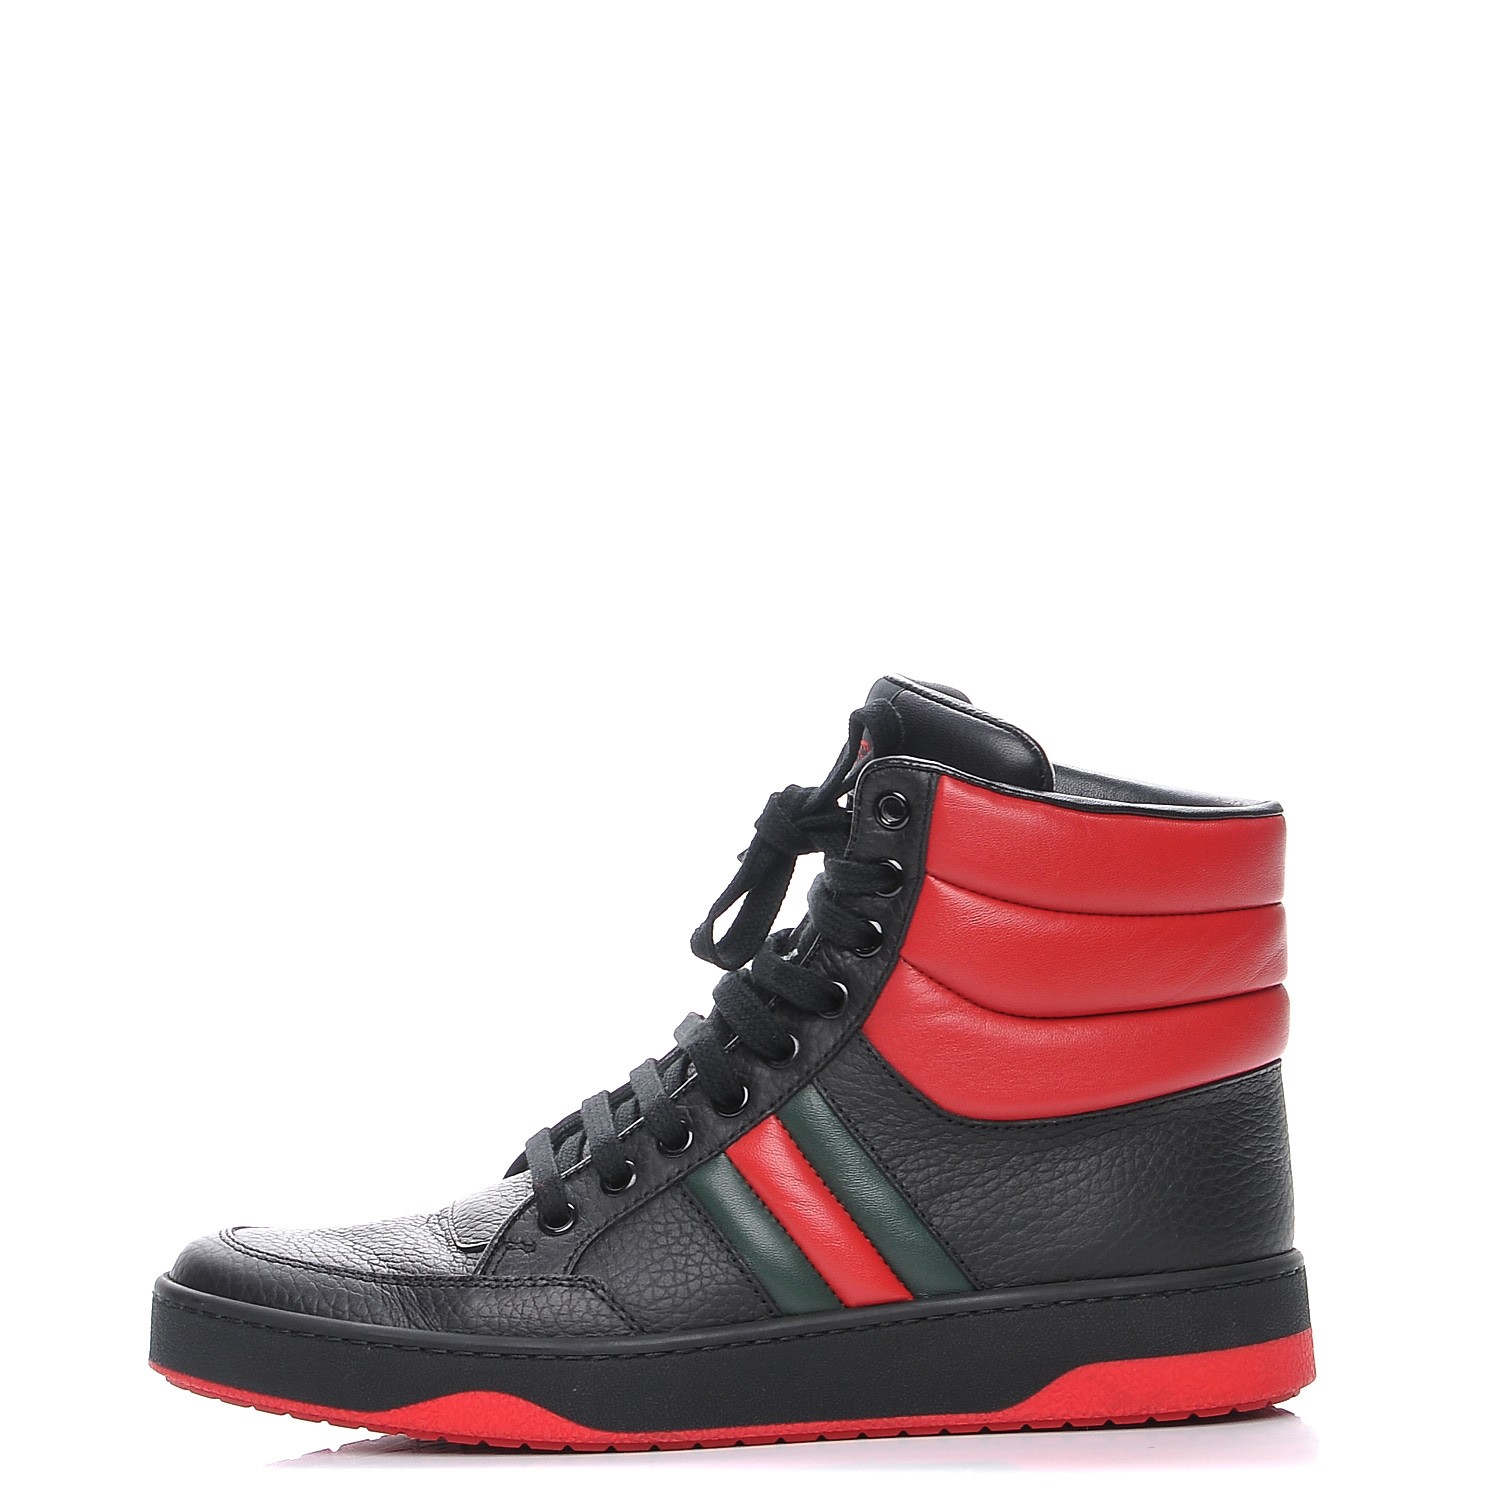 GUCCI Calfskin New Praga Karibu High Top Sneakers 38 Black Red Green 209121